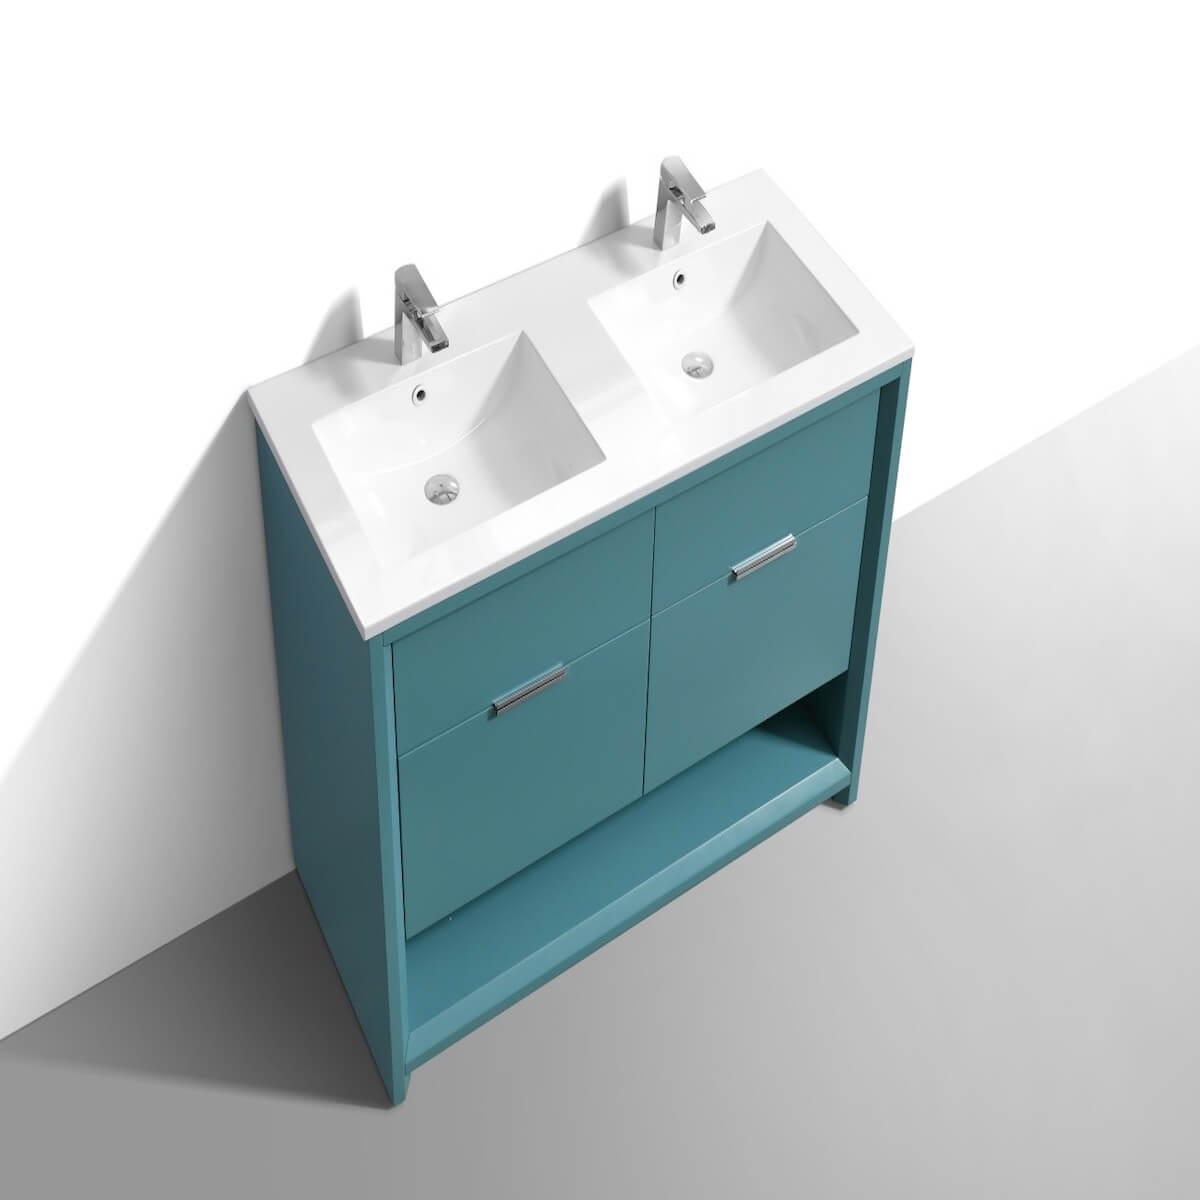 KubeBath Nudo 48" Teal Green Double Sink Free Standing Modern Bathroom Vanity Side NUDO48D-TG #finish_teal green